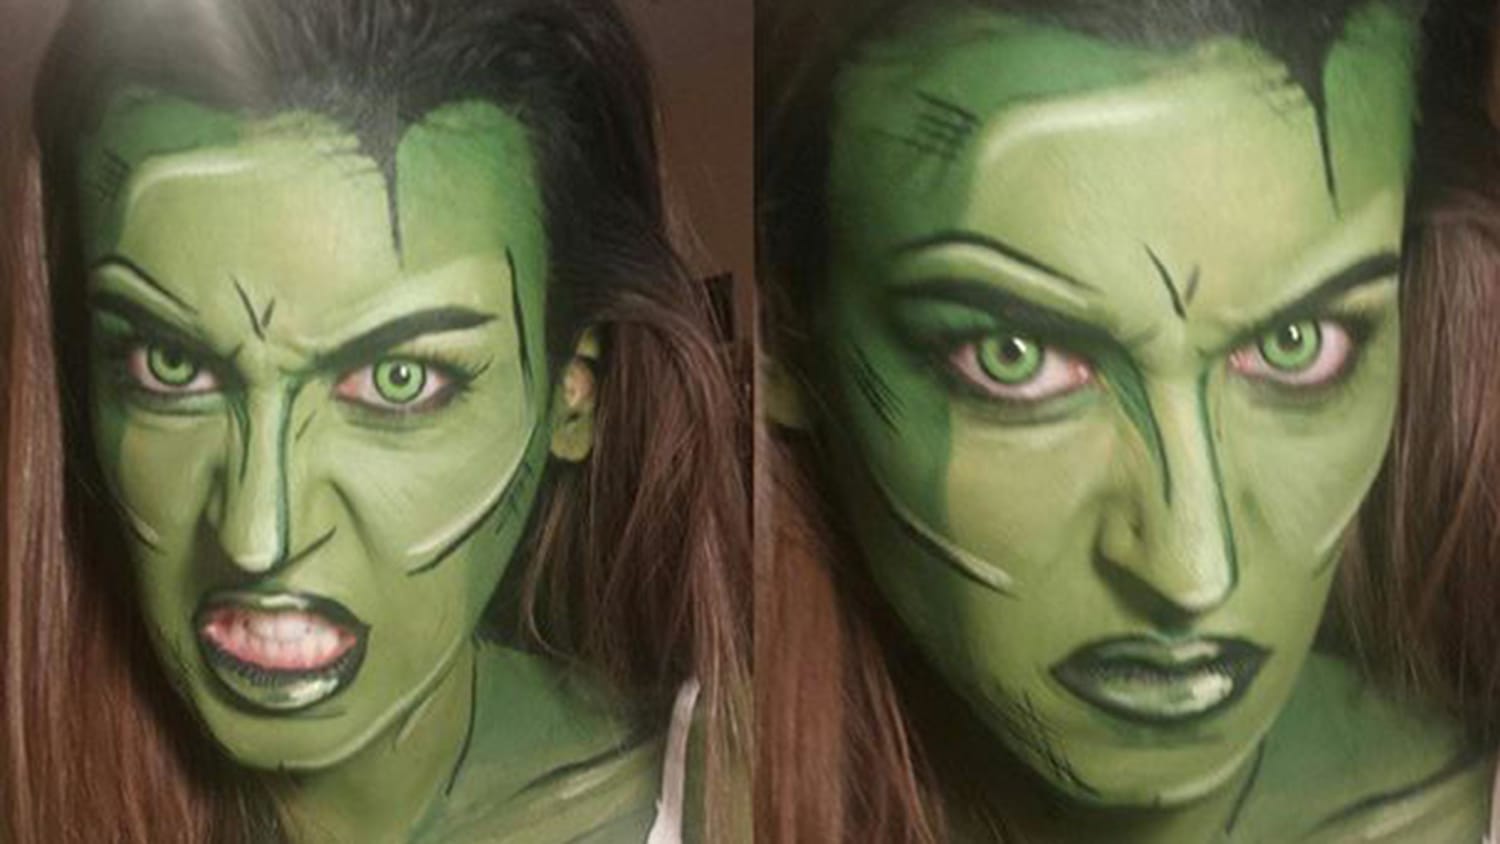 face painting hulk